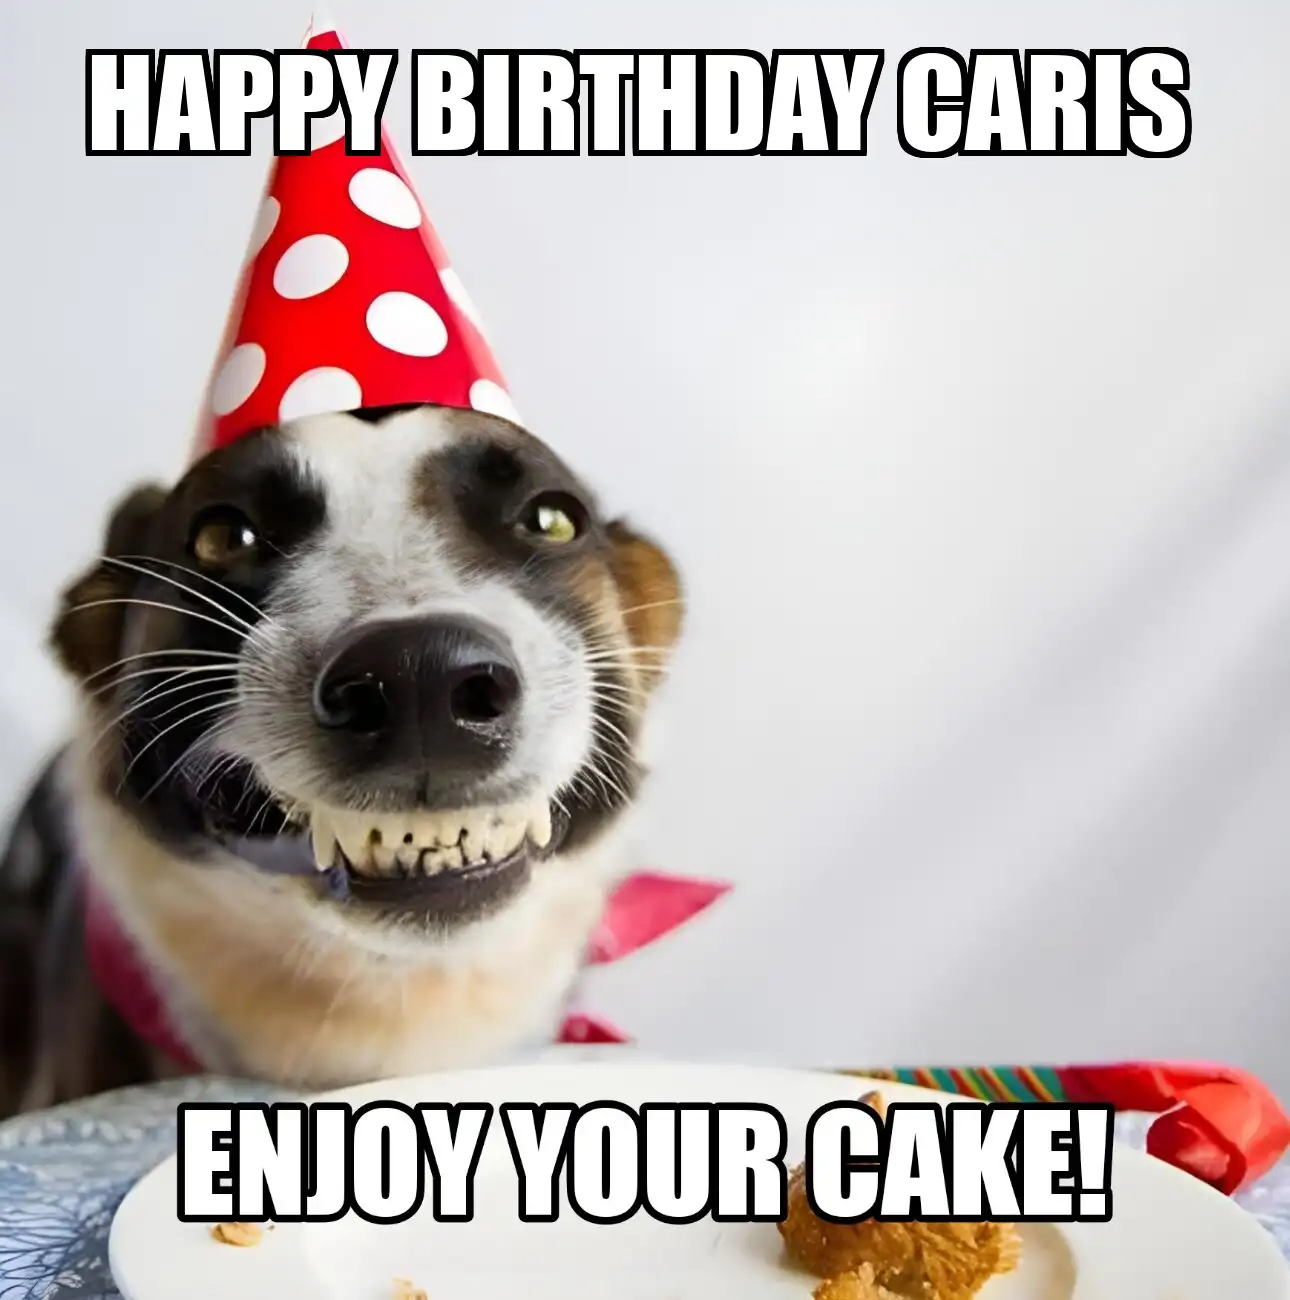 Happy Birthday Caris Enjoy Your Cake Dog Meme